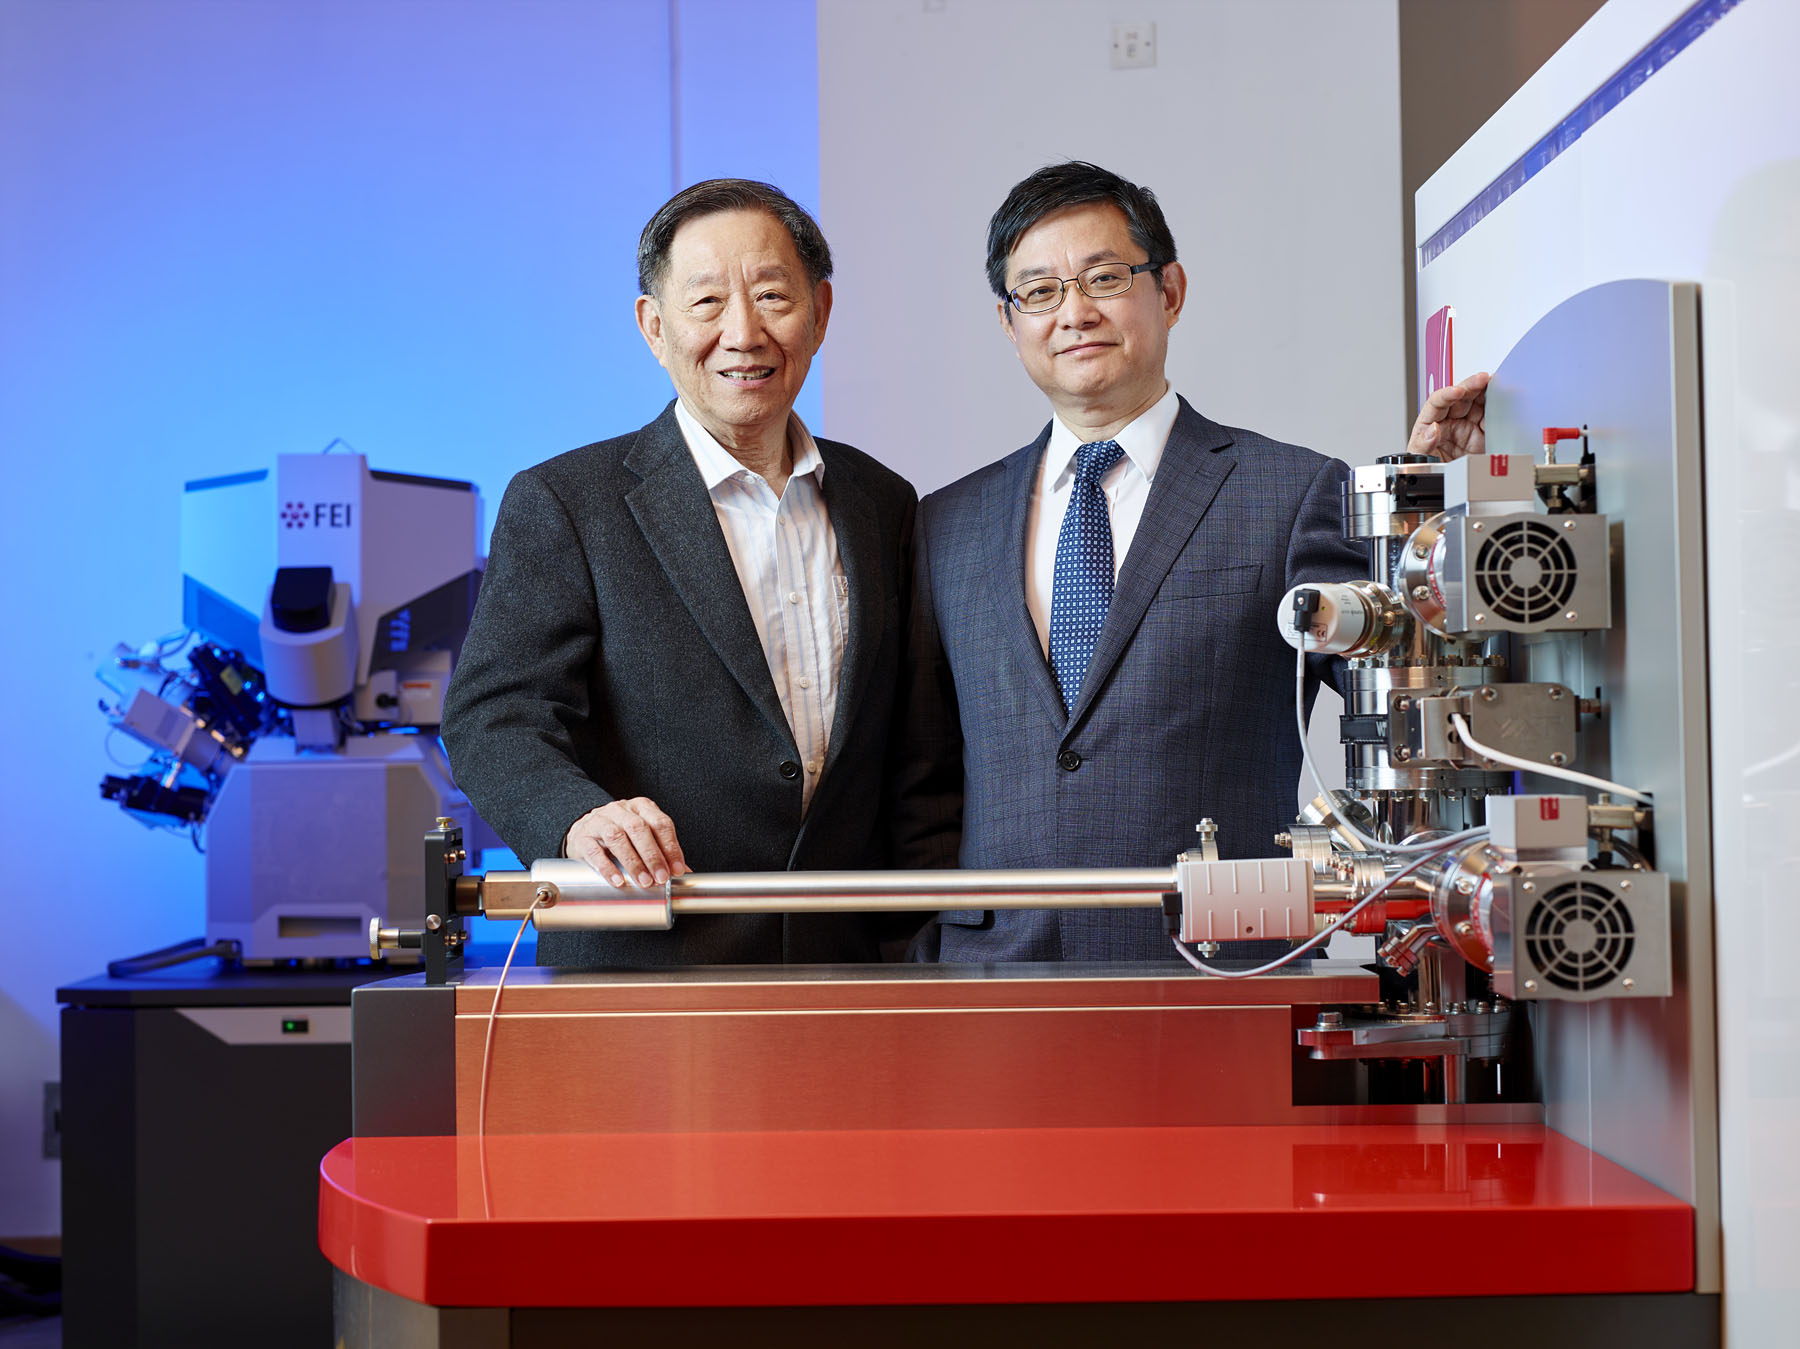 Professor Lu Jian’s and Professor Liu Chain-tsuan